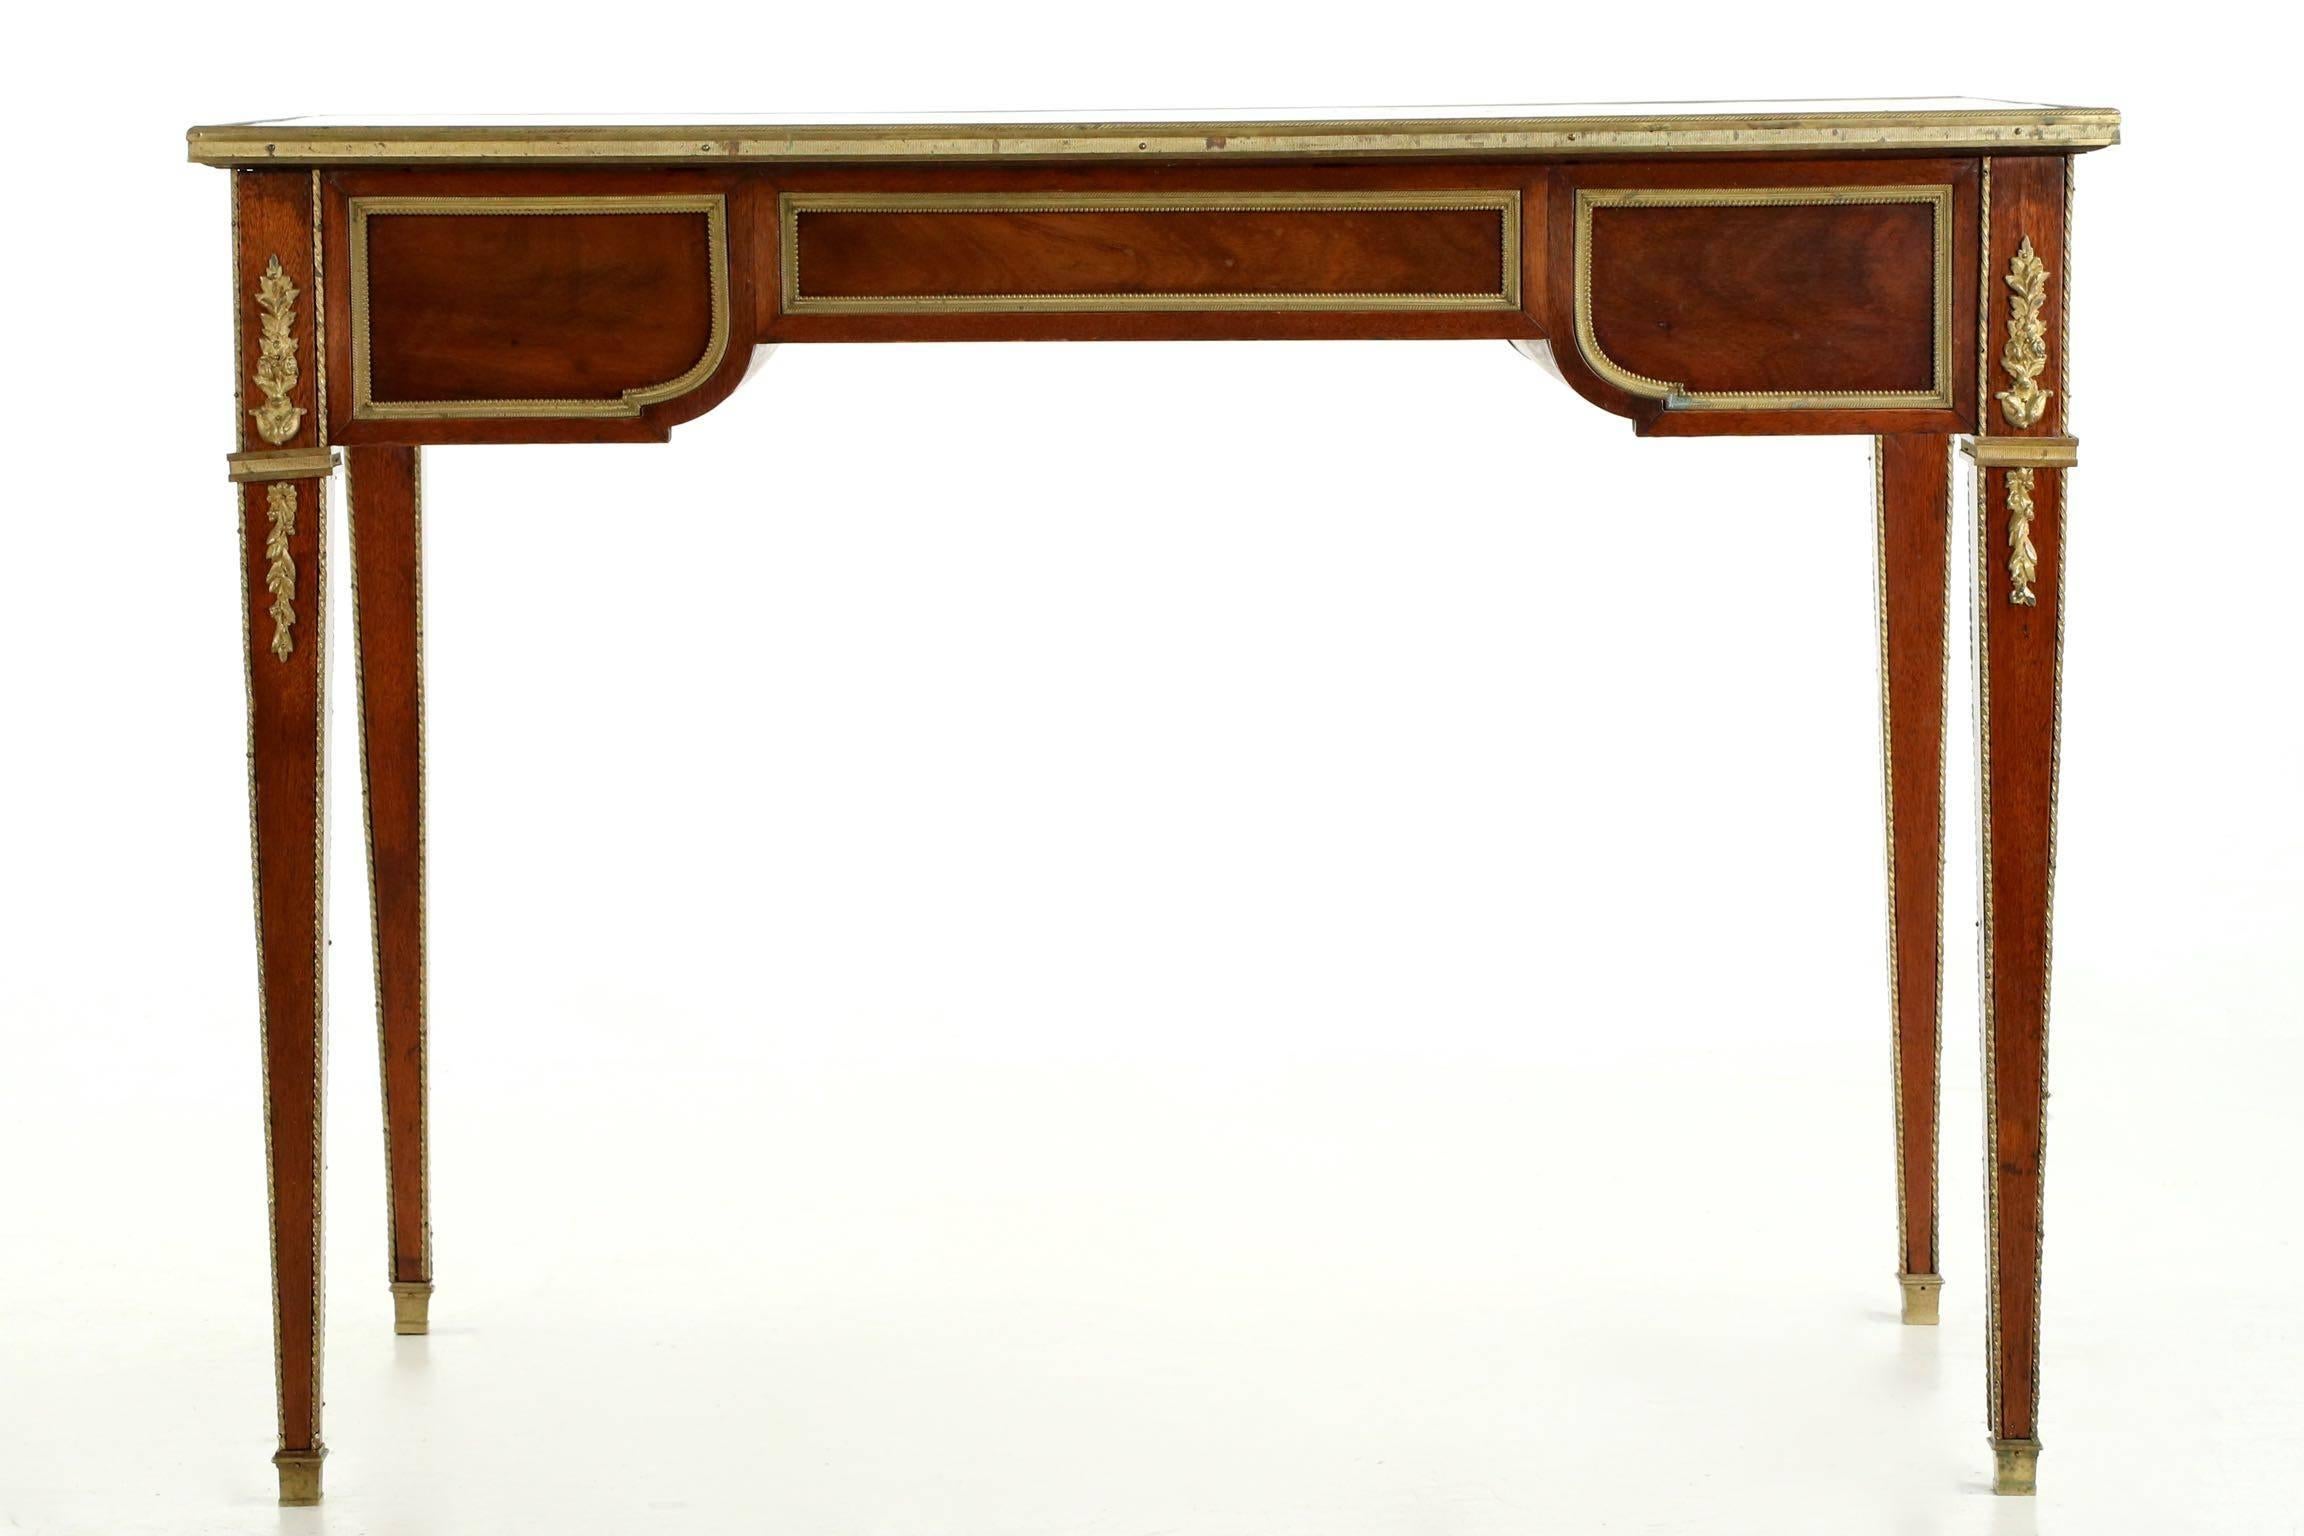 Gilt 20th Century French Neoclassical Antique Mahogany Bureau Plat Writing Table Desk